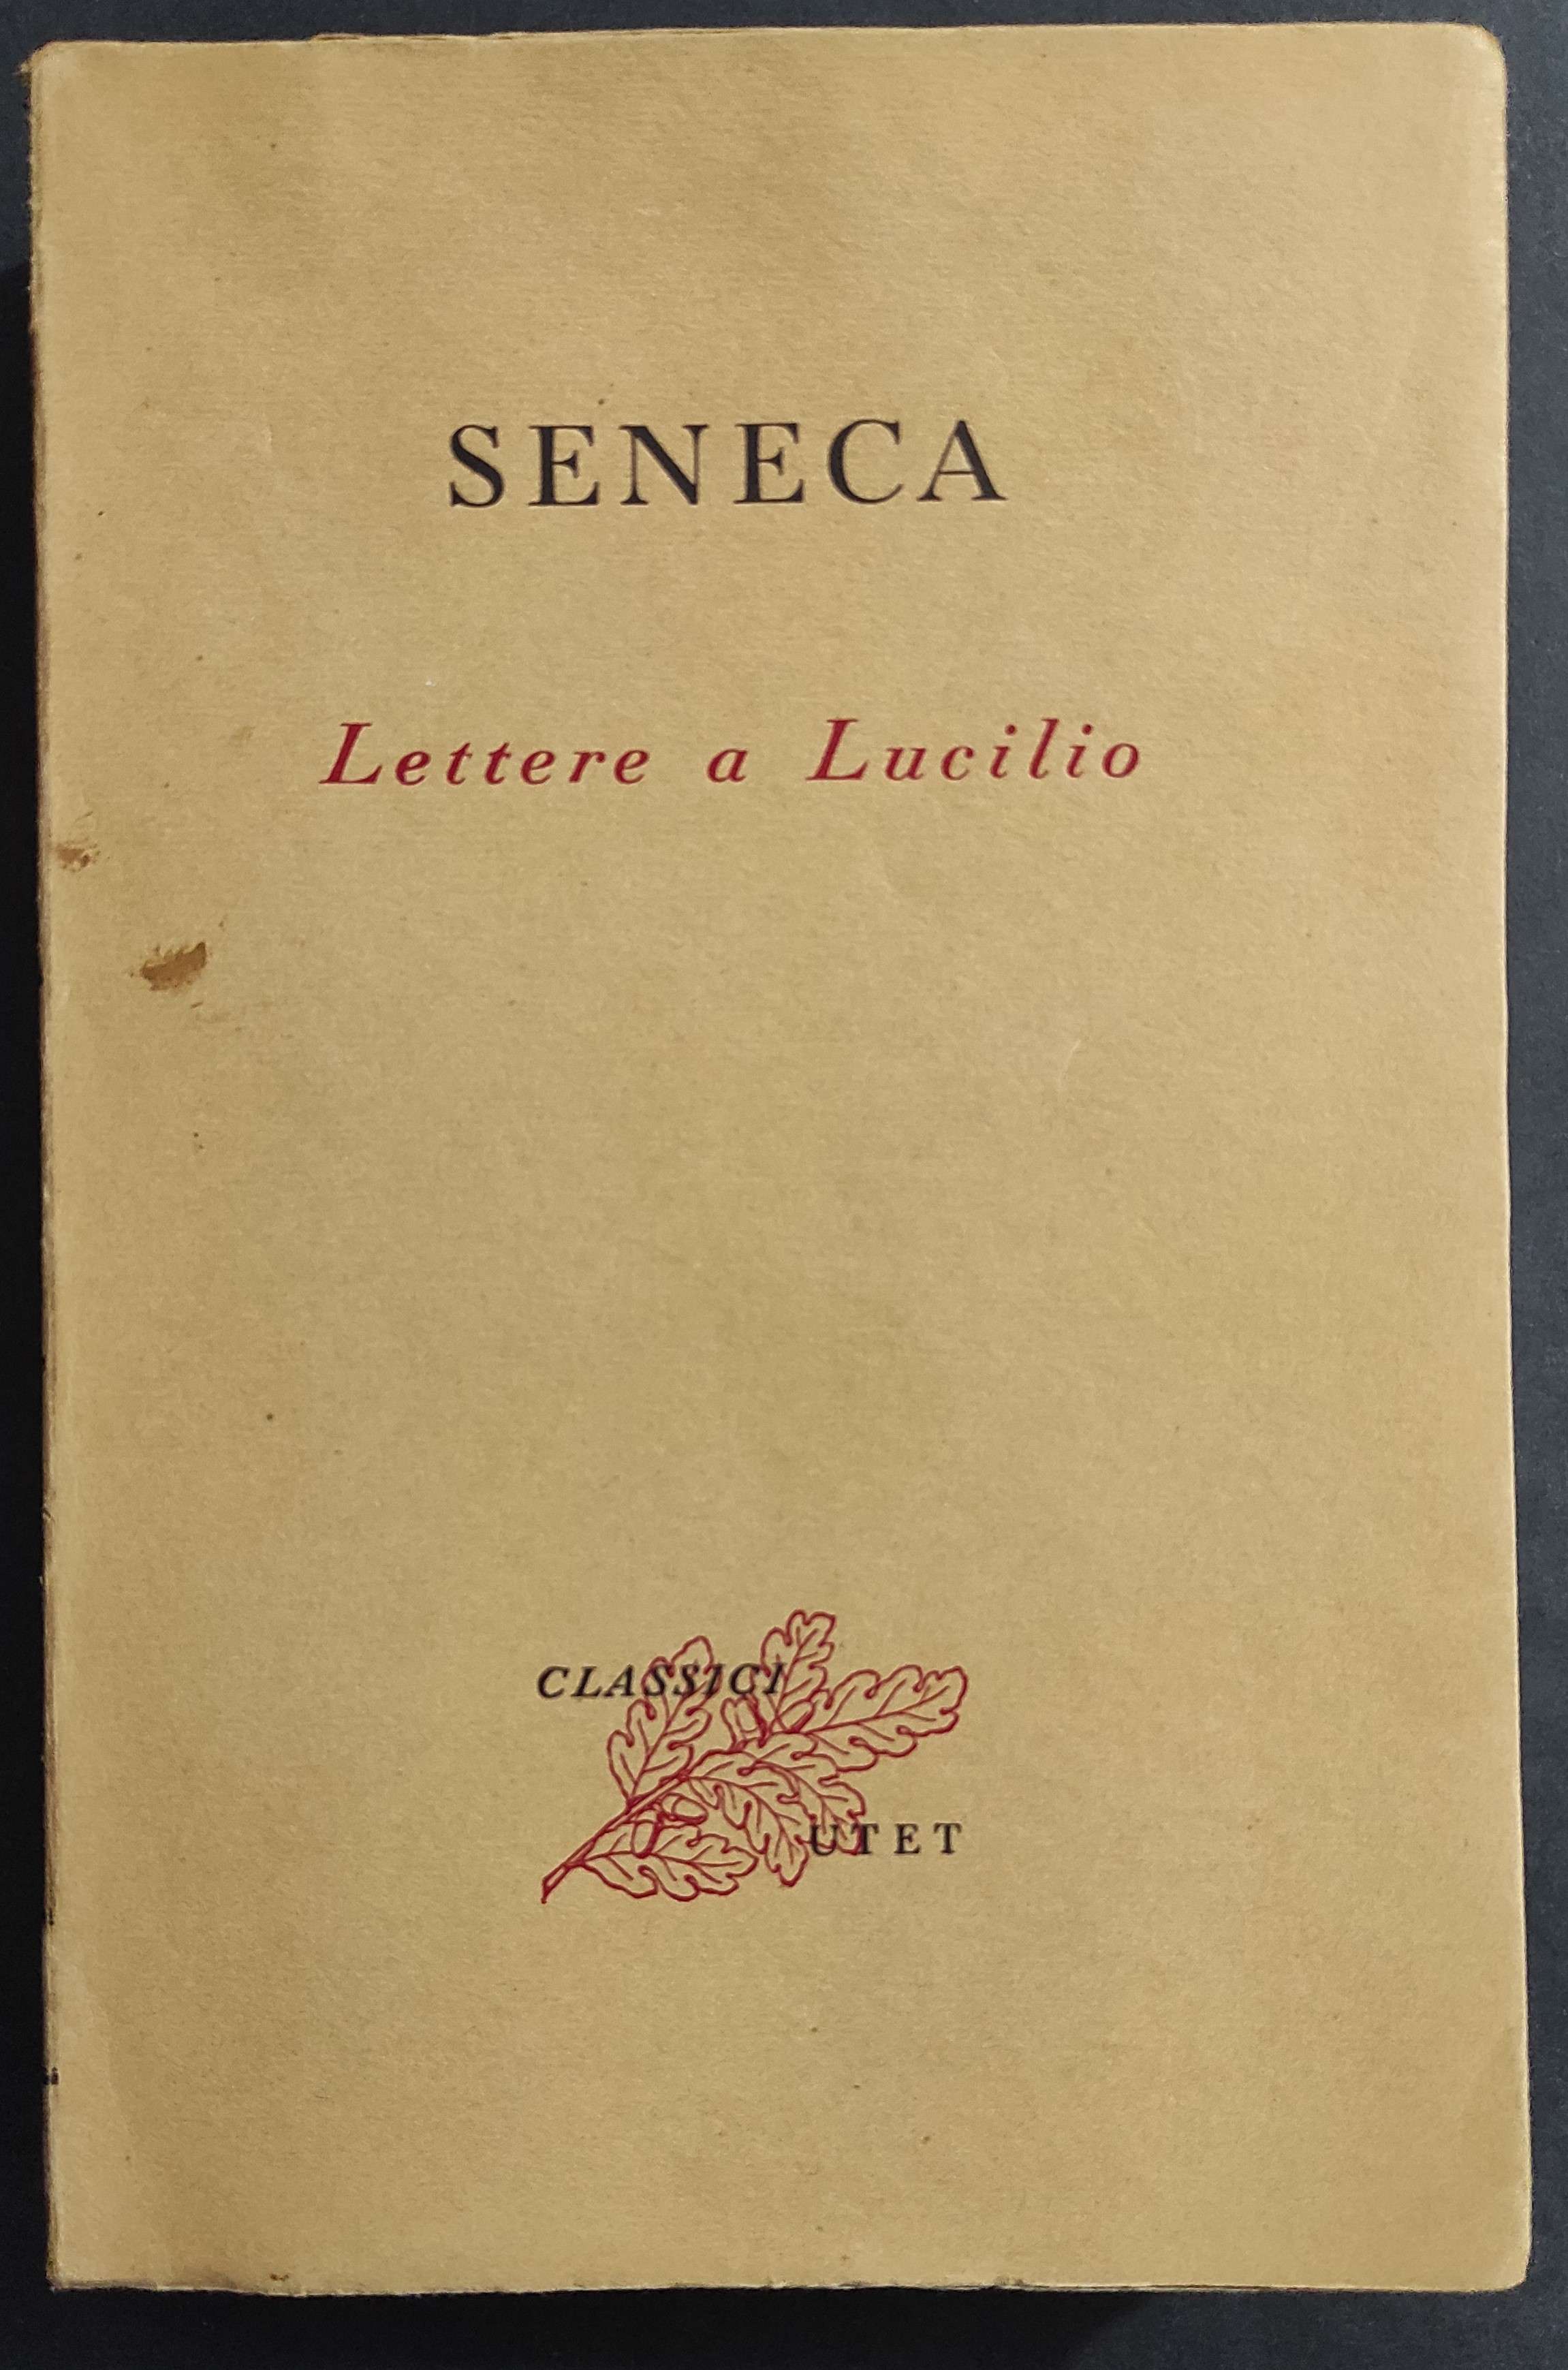 Seneca - Lettere a Lucilio - U. Boella - Ed. UTET - 1951